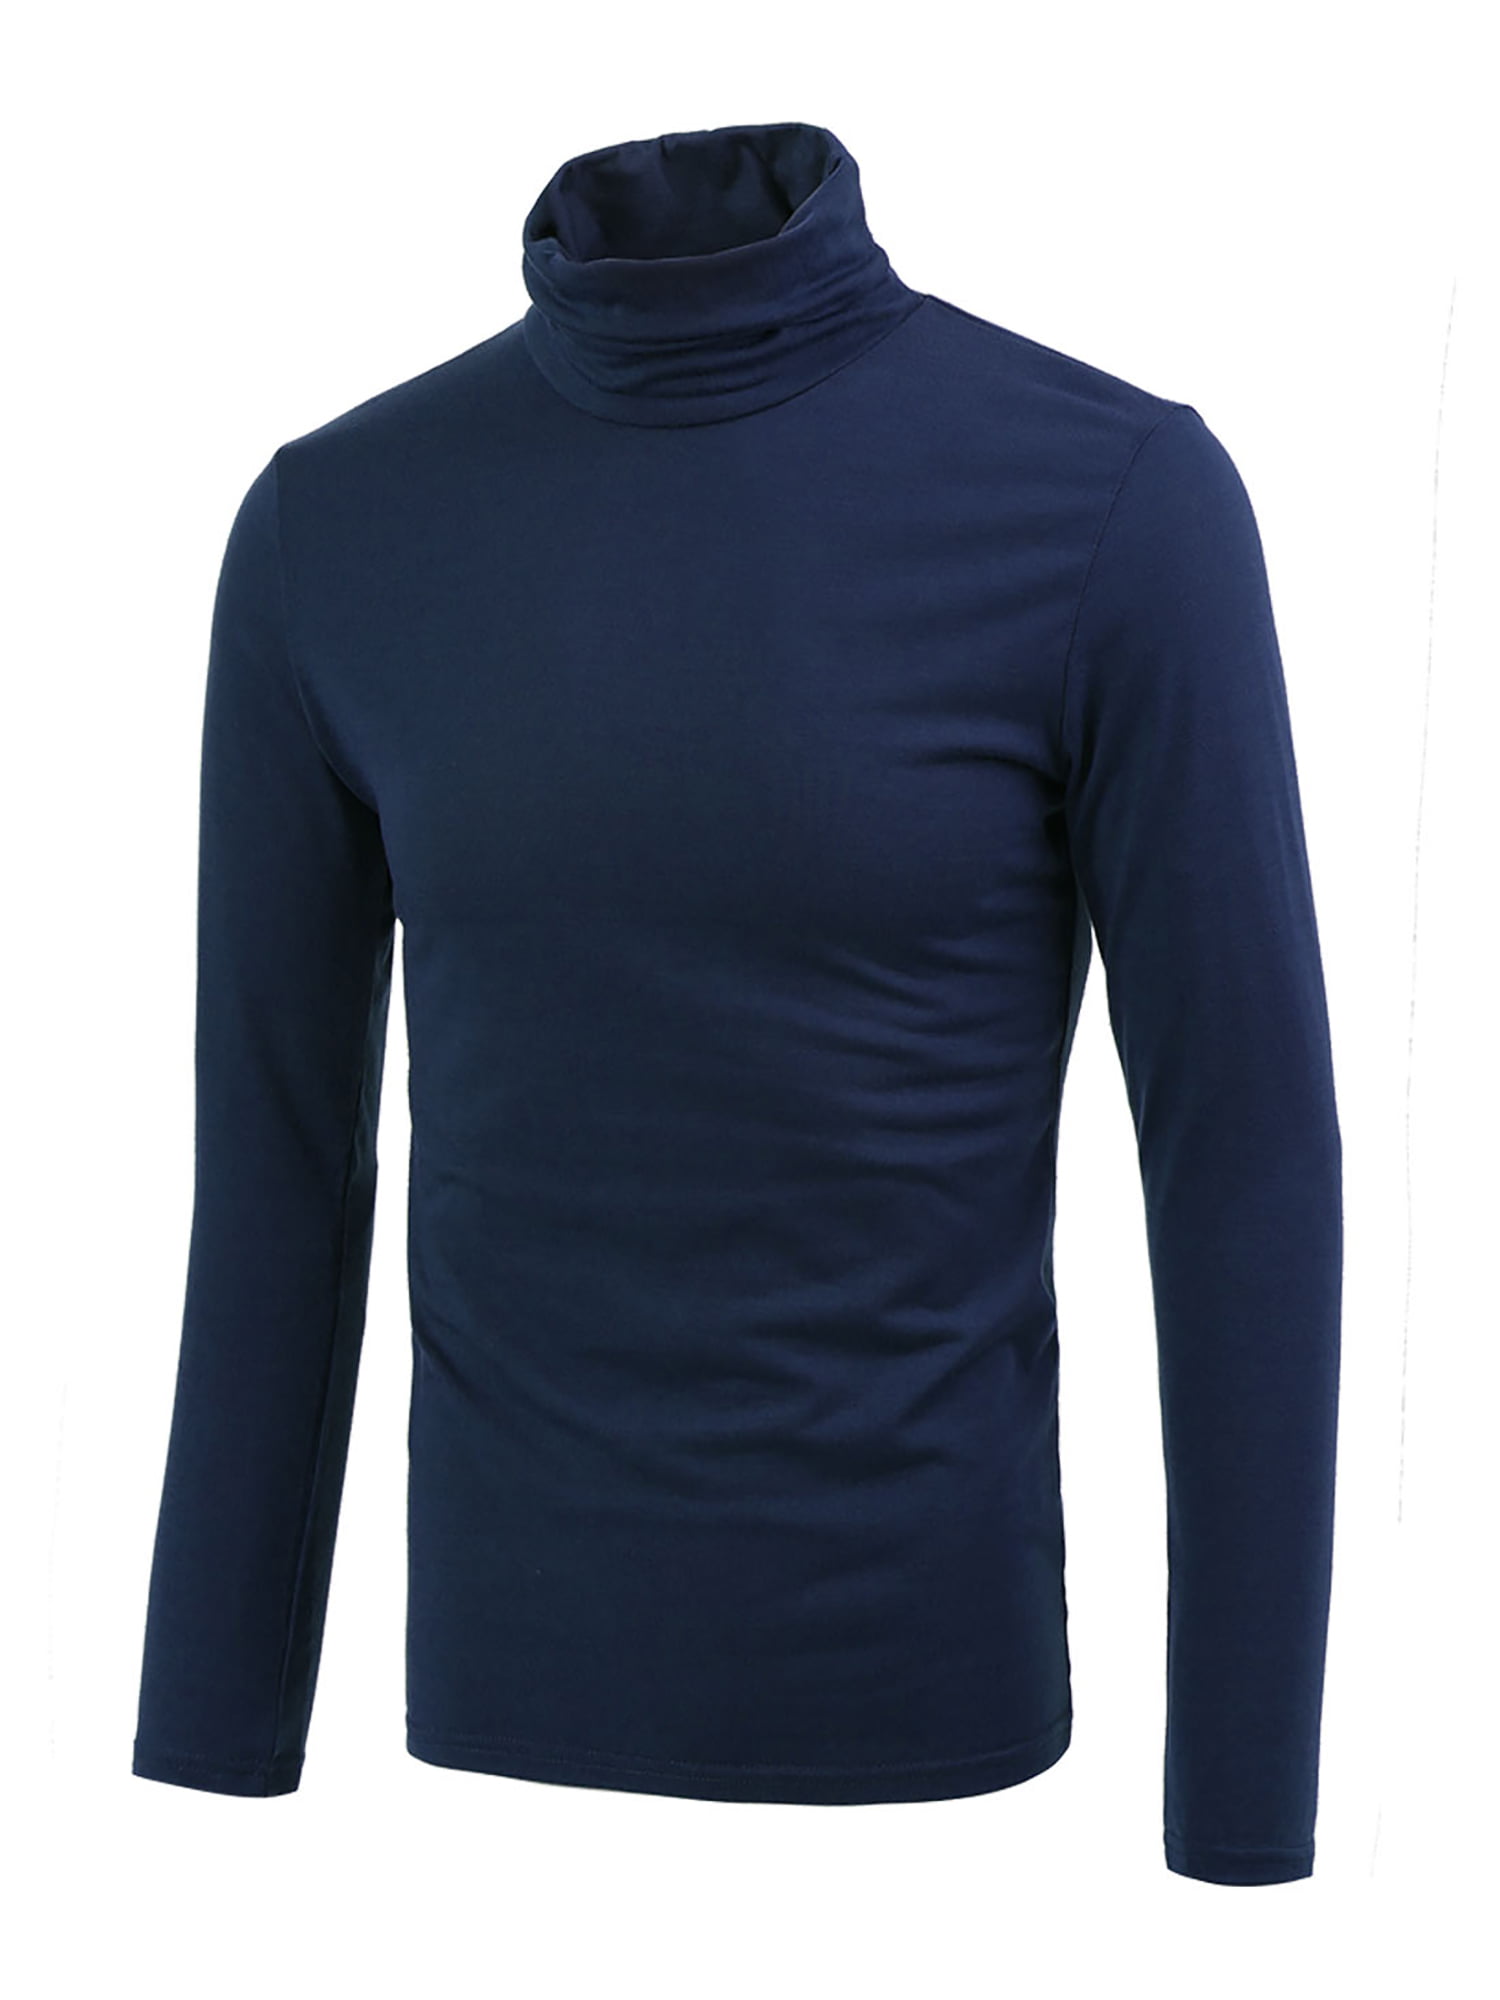 Sourcingmap Men Slim Fit Lightweight Turtleneck Long Sleeve Pullover Top Turtleneck T-Shirt 